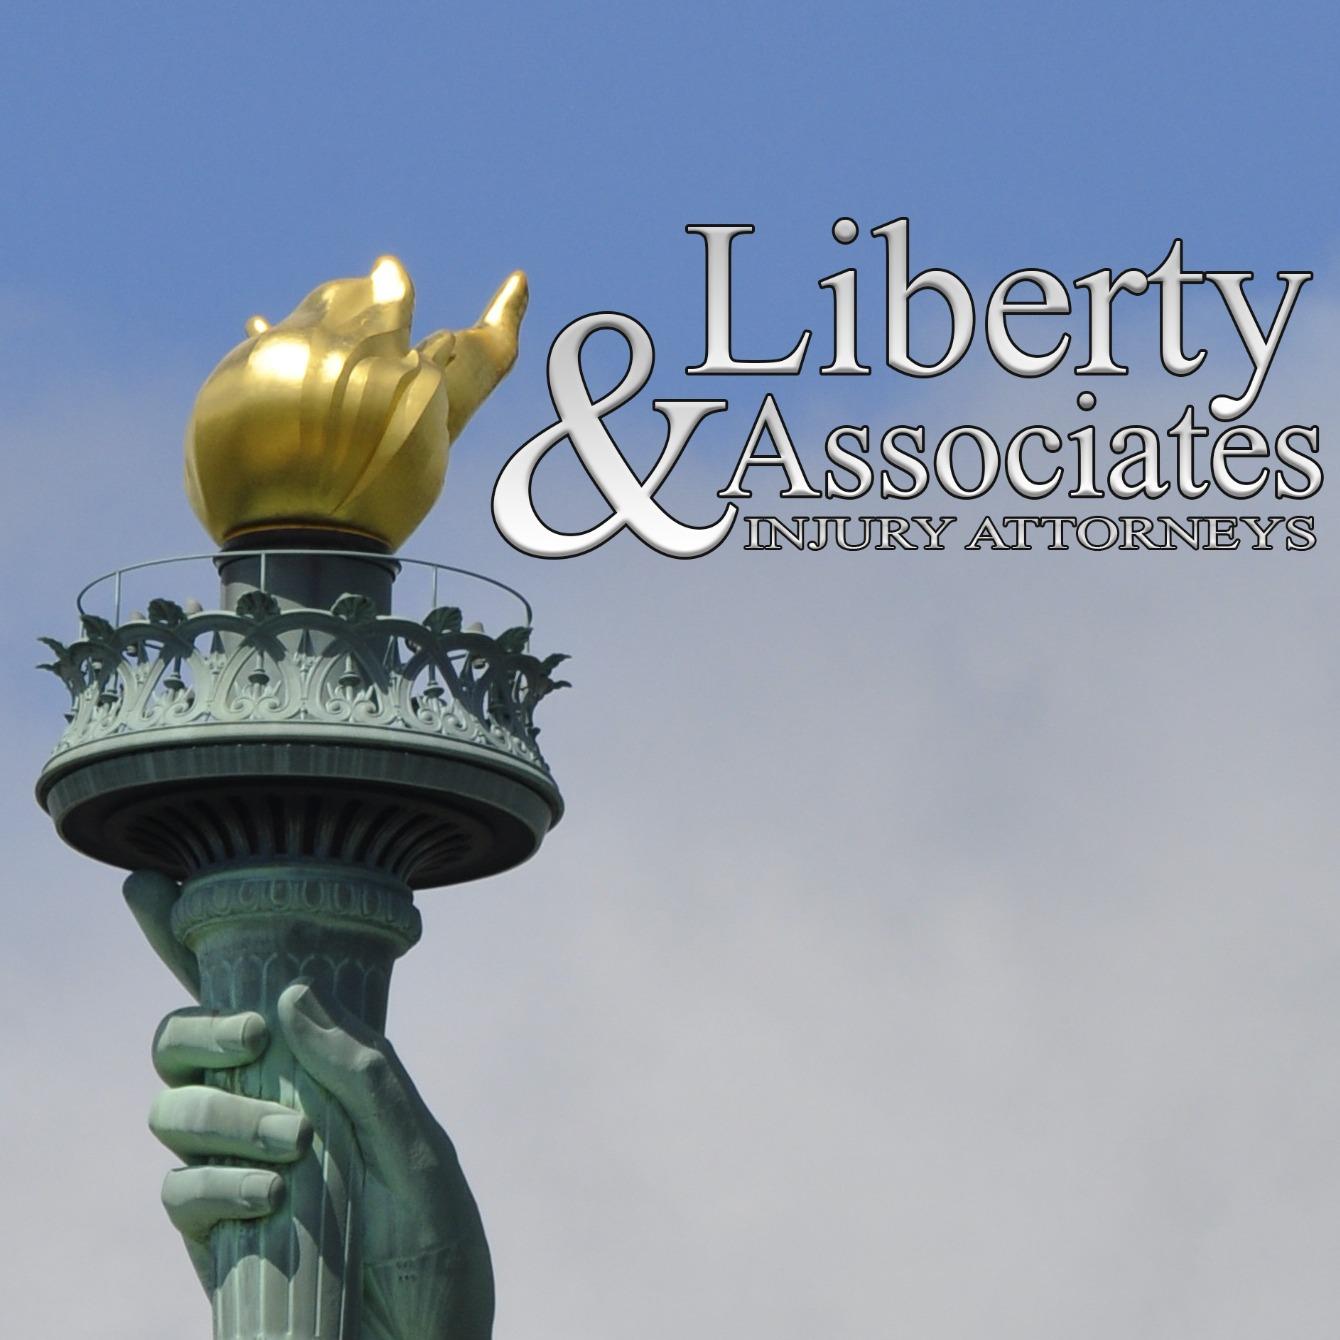 Liberty & Associates Santa Monica (310)899-6030